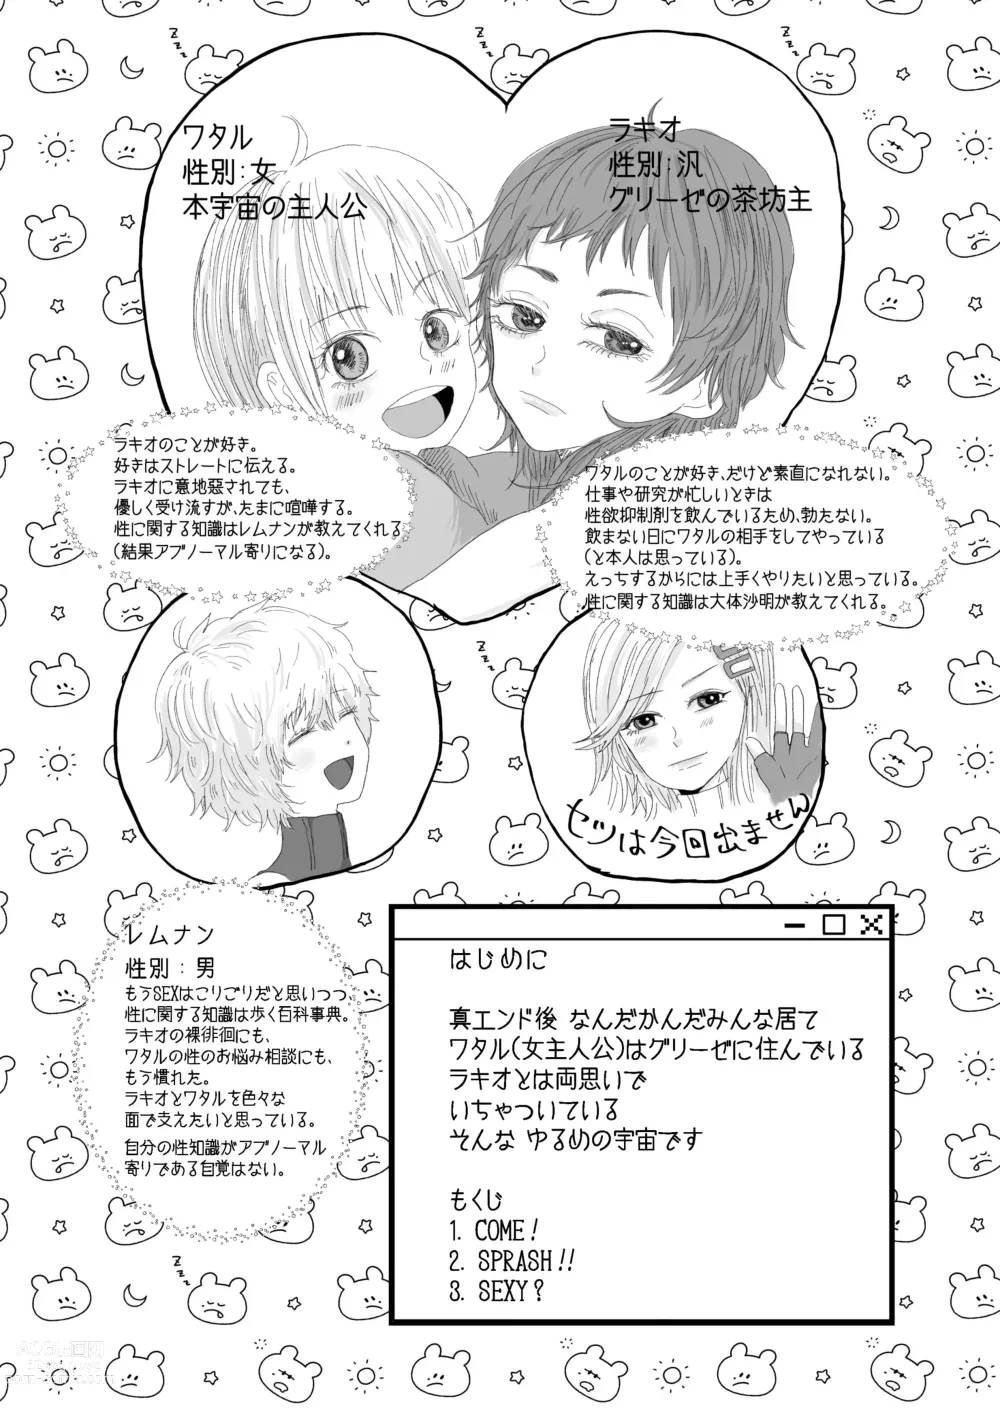 Page 2 of doujinshi Raki Shu Ero Manga